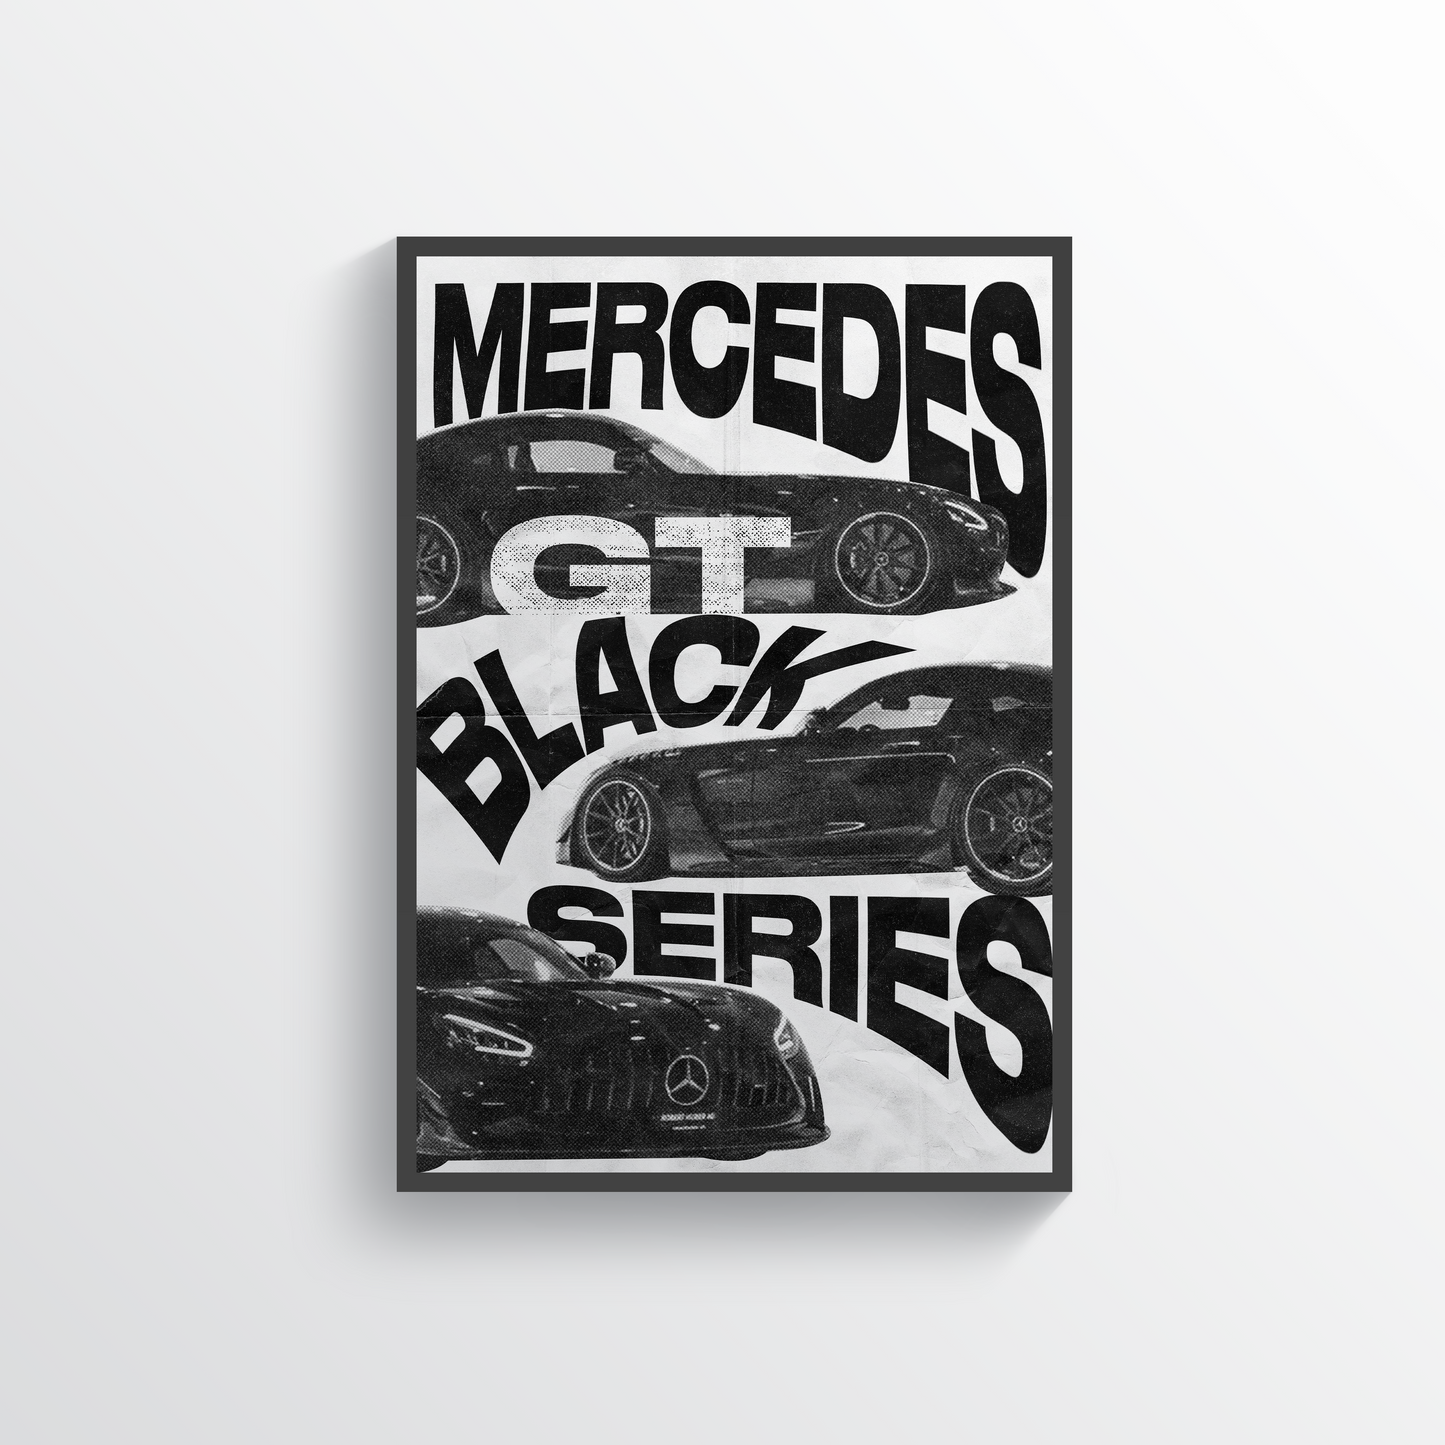 Mercedes Black Series